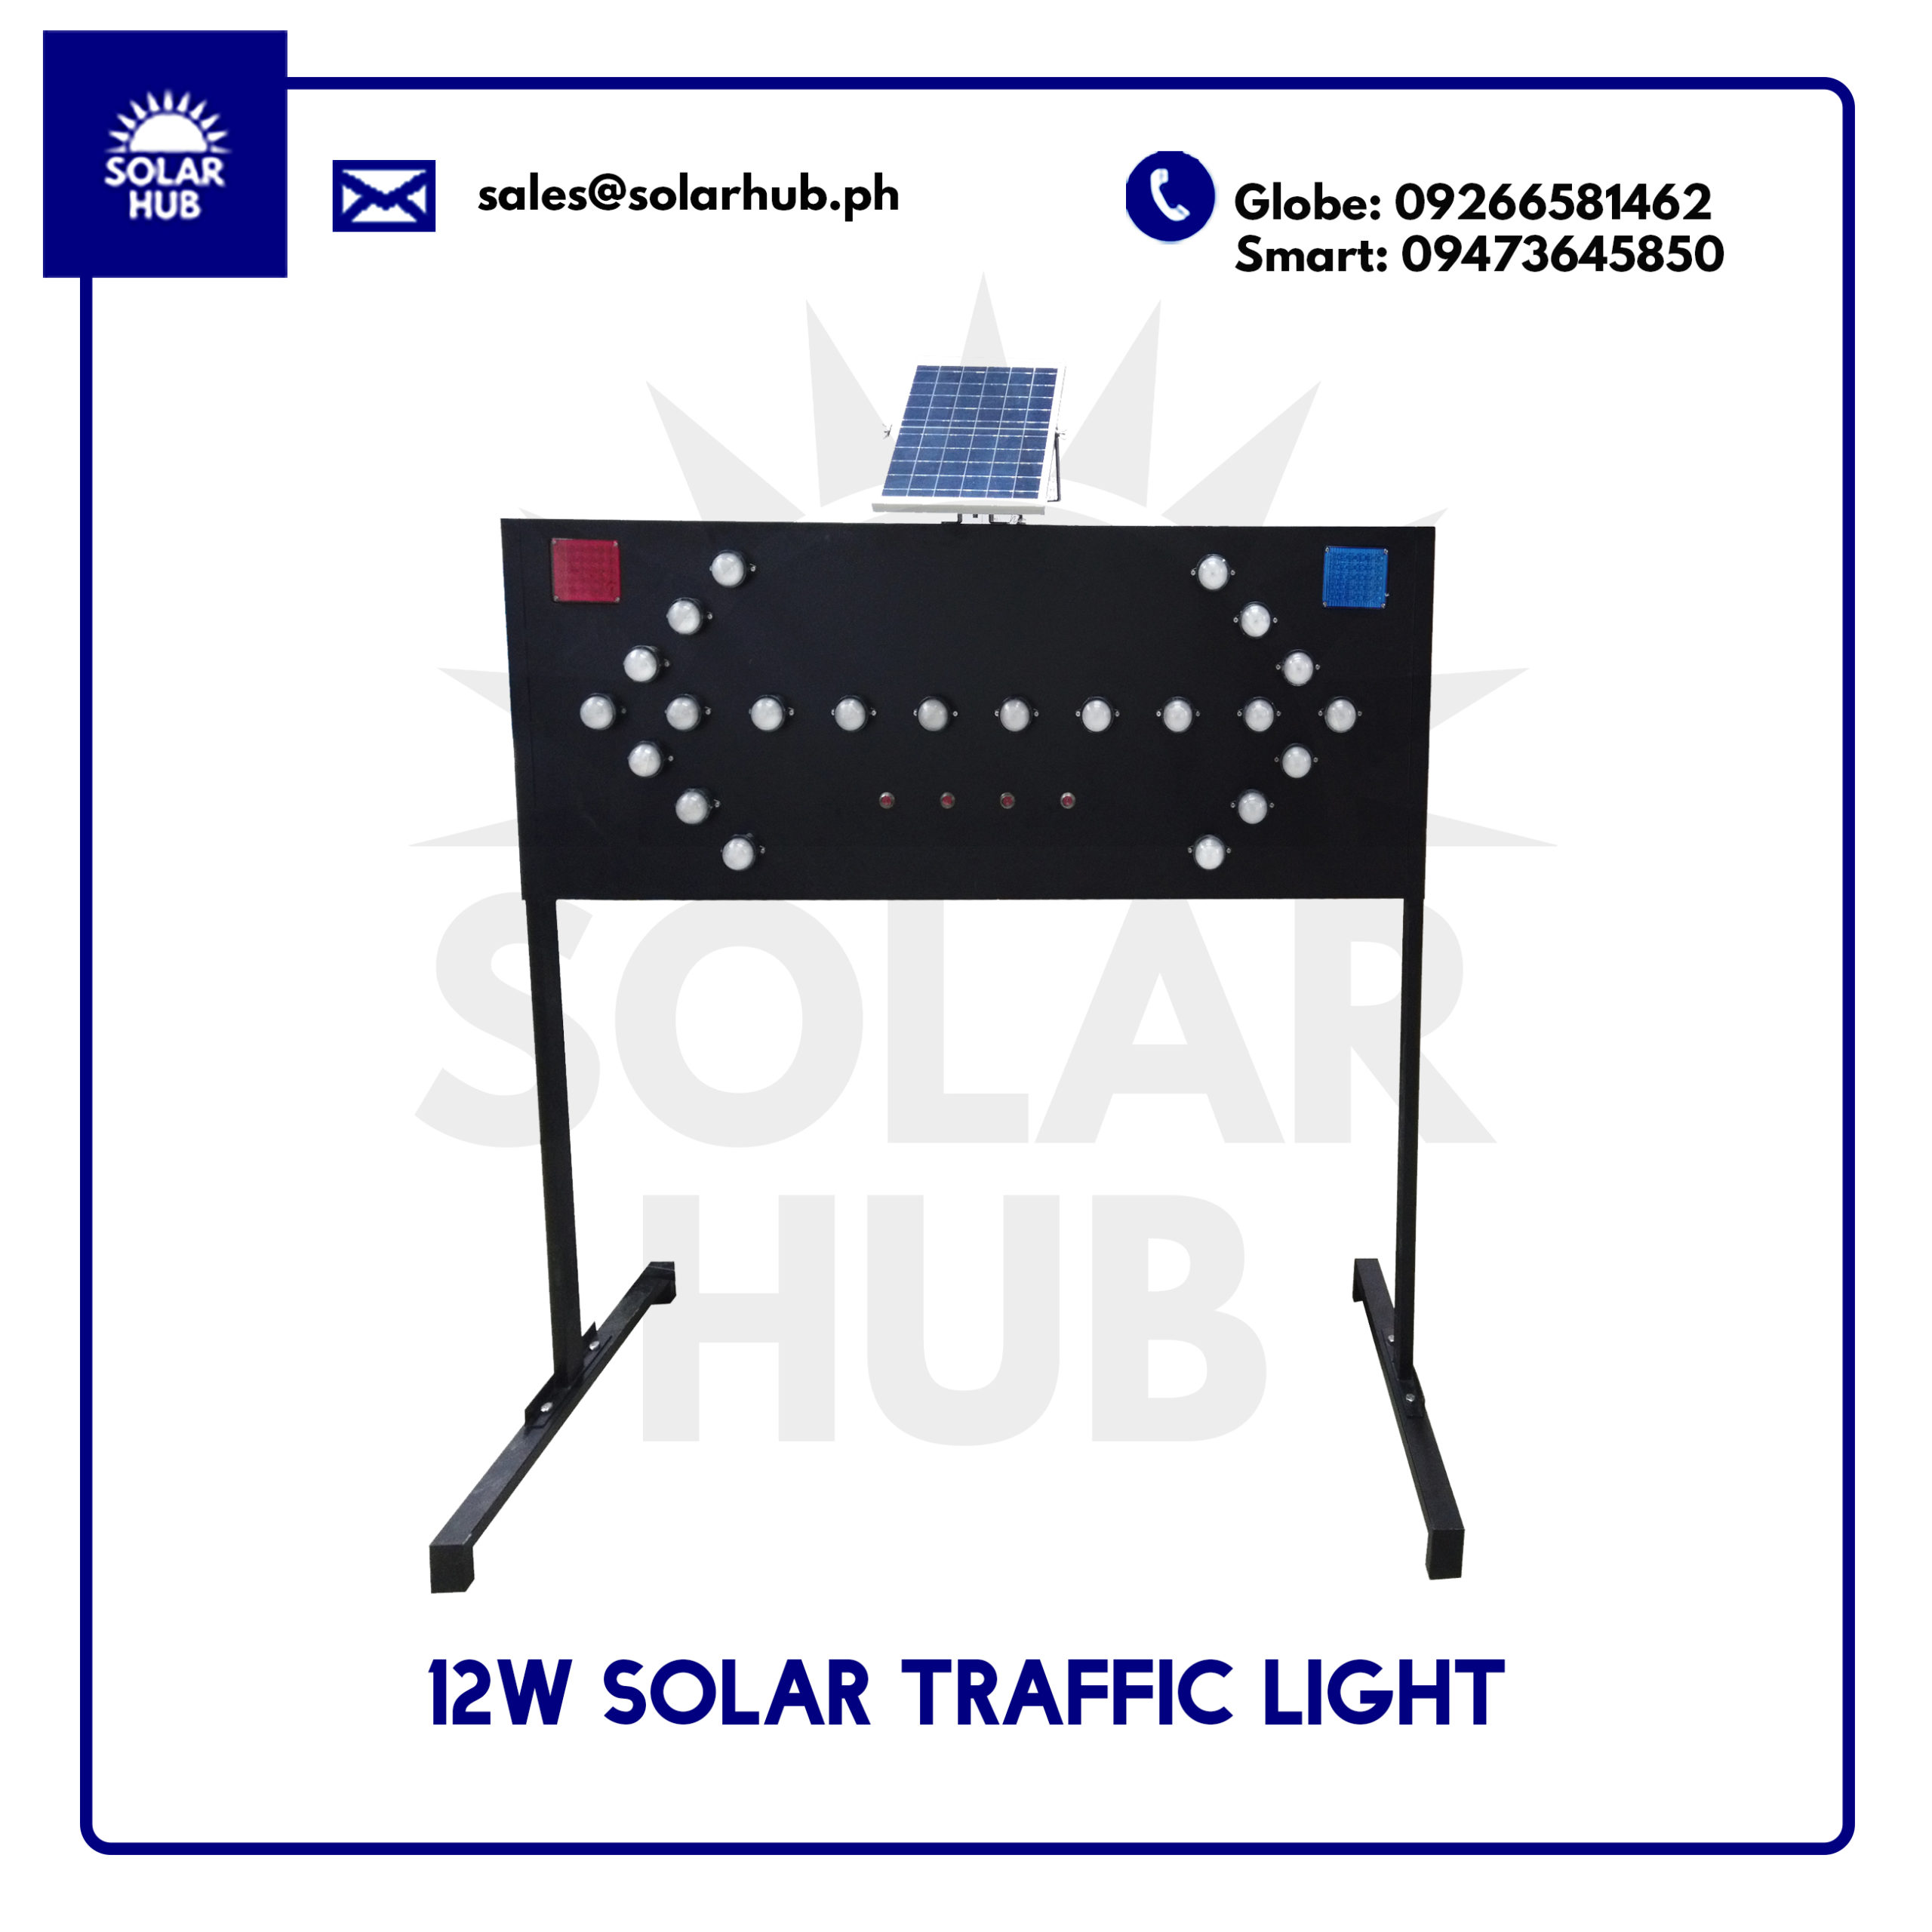 12W Solar Traffic Light